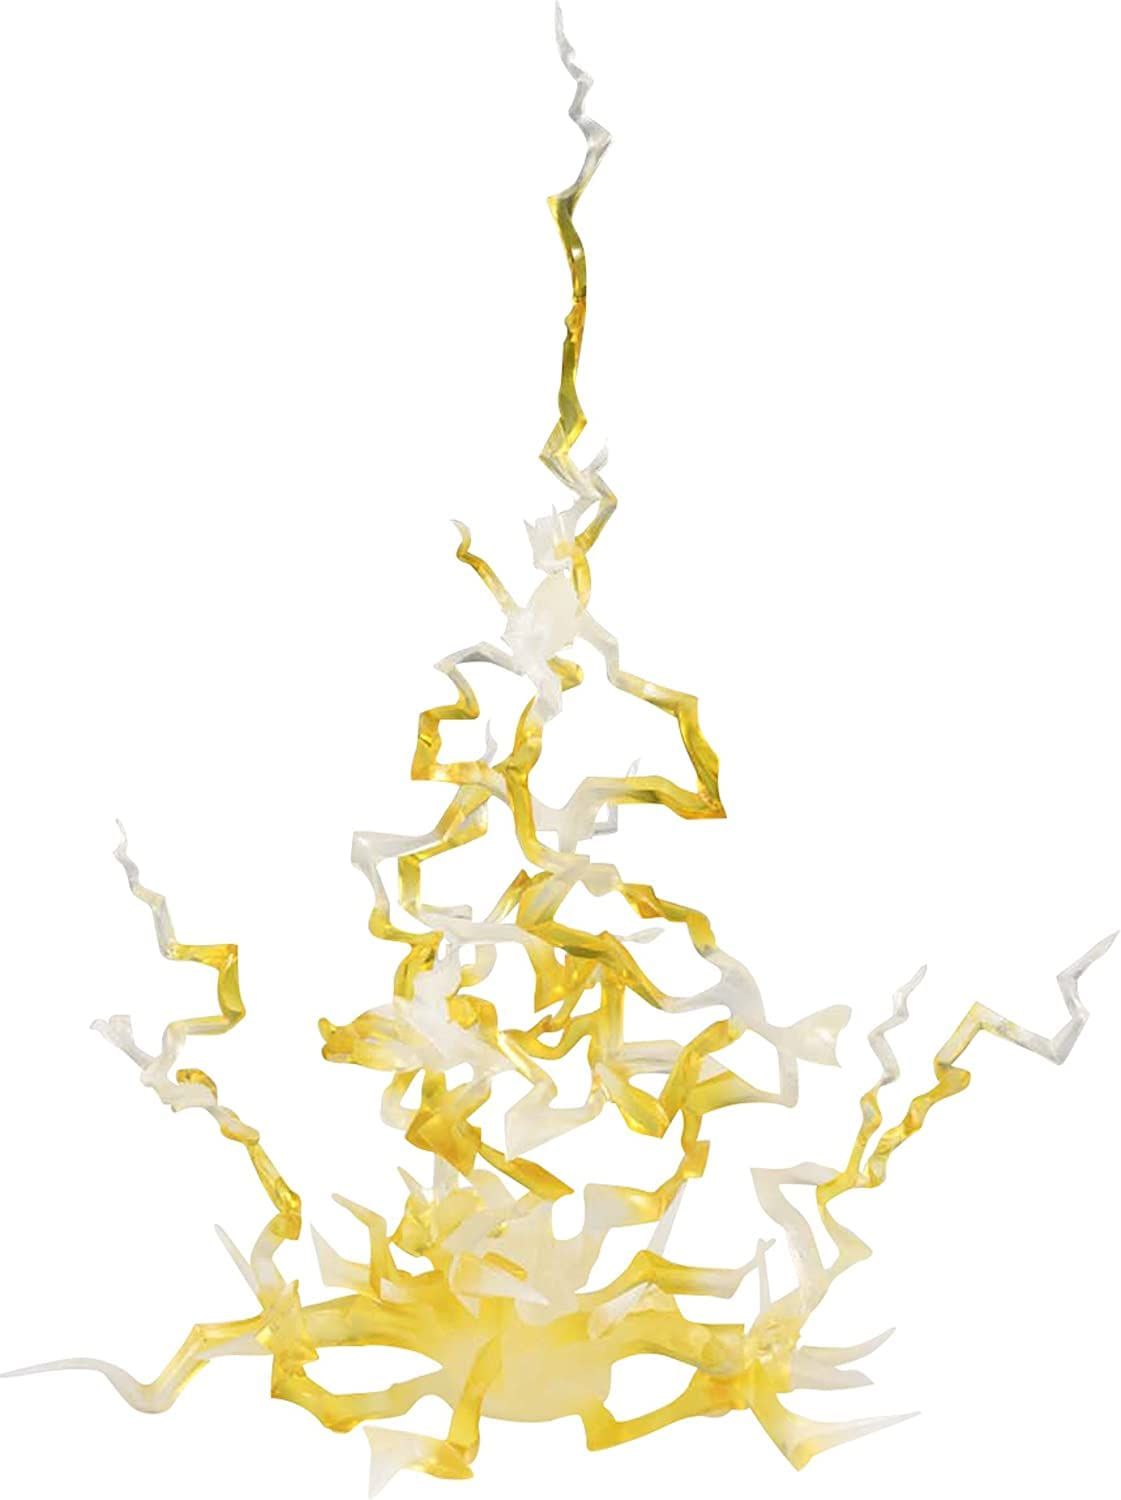 BANDAI SPIRITS(バンダイ スピリッツ) 魂EFFECT THUNDER Yellow Ver. ノンスケール ABS&PVC製 塗装済み完成品フィギュア - BanzaiHobby